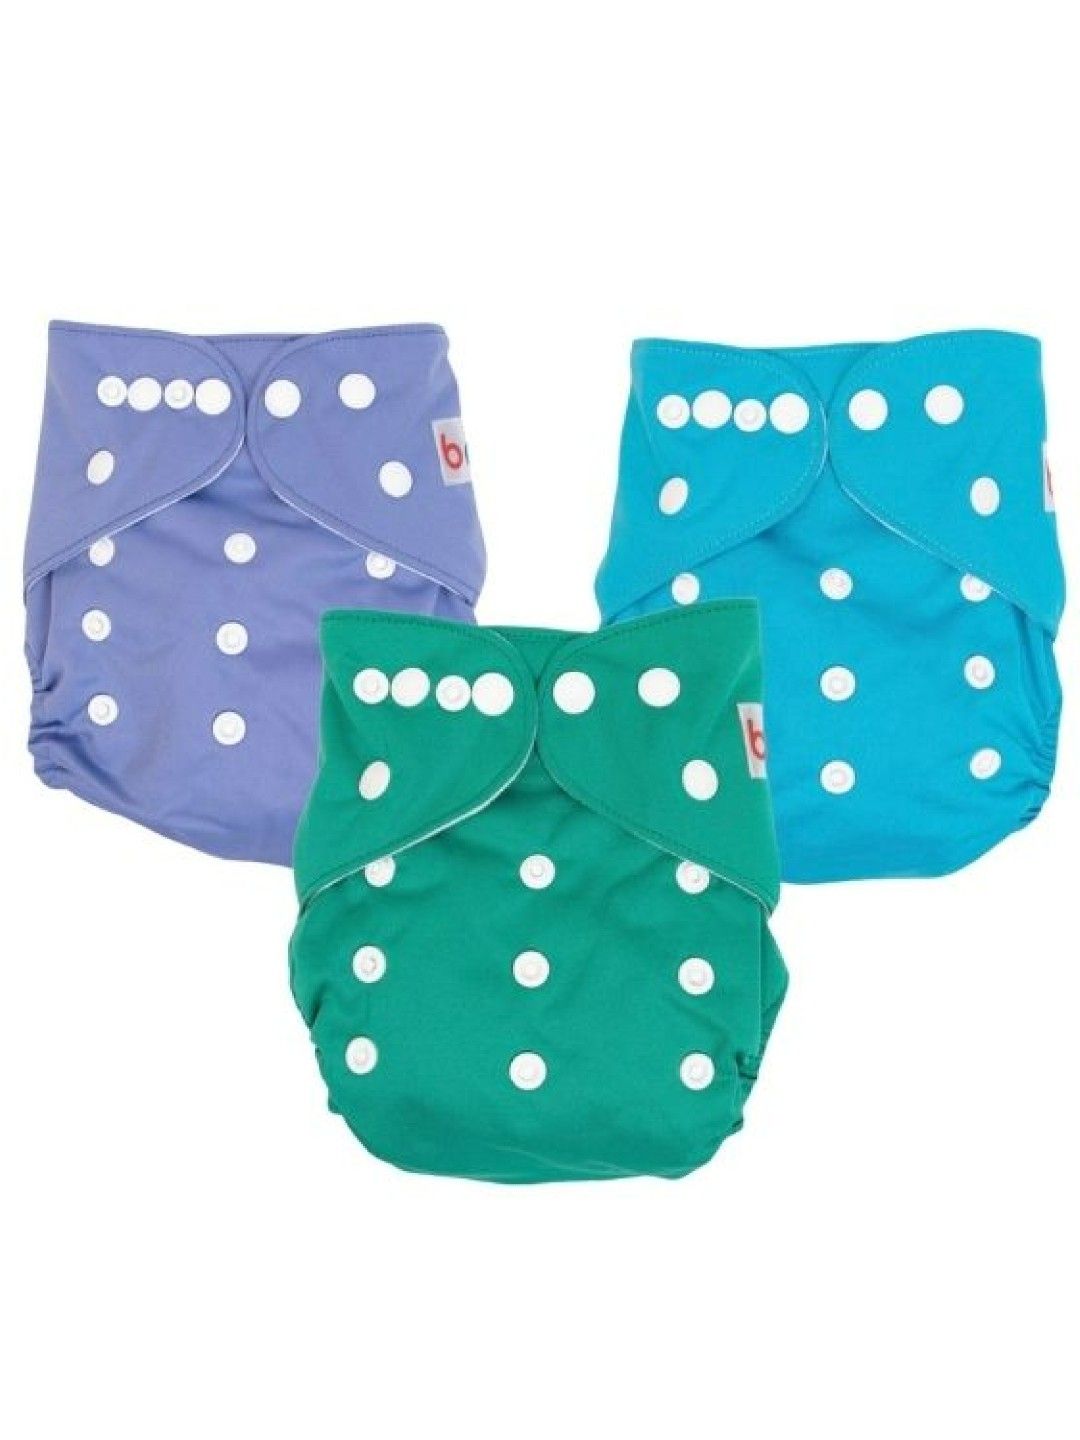 bean fashion Snappies Basic Gear Cloth Diaper (Set of 3)